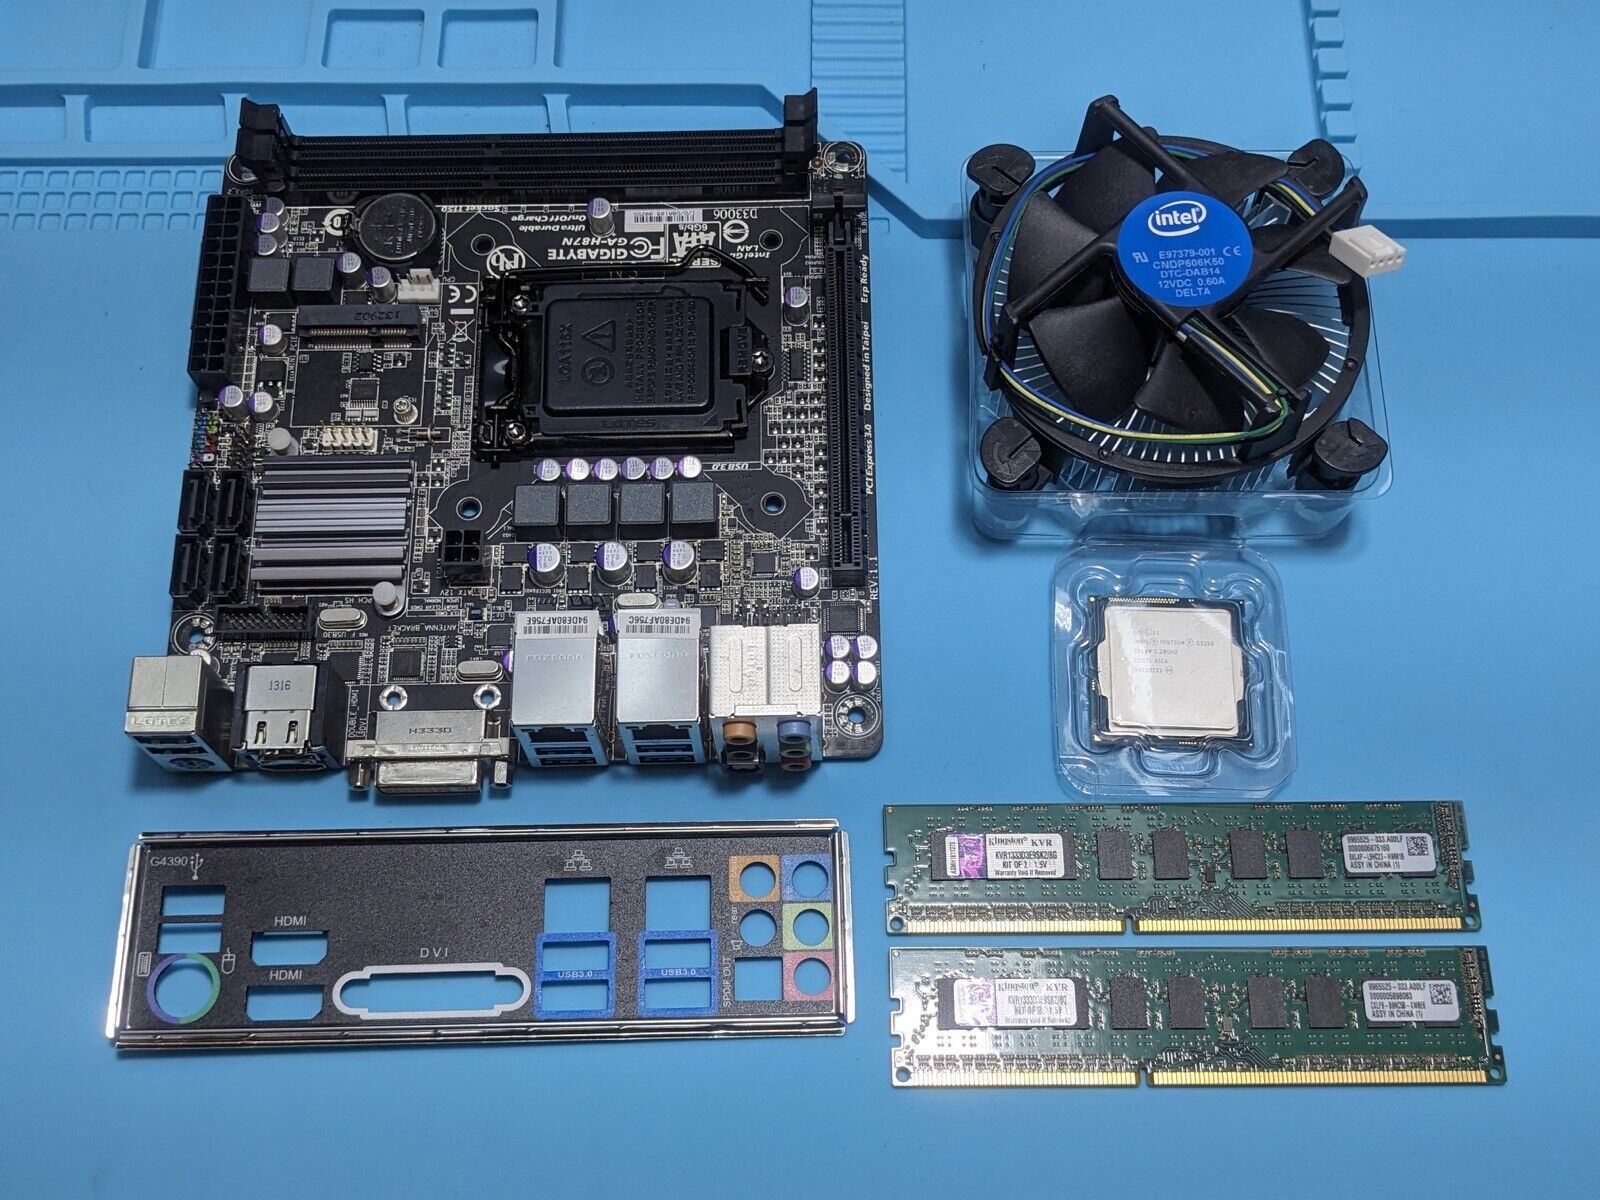 GIGABYTE GA-H87N Motherboard / Pentium G3258 CPU / Kingston 8GB (2 x 4GB) RAM